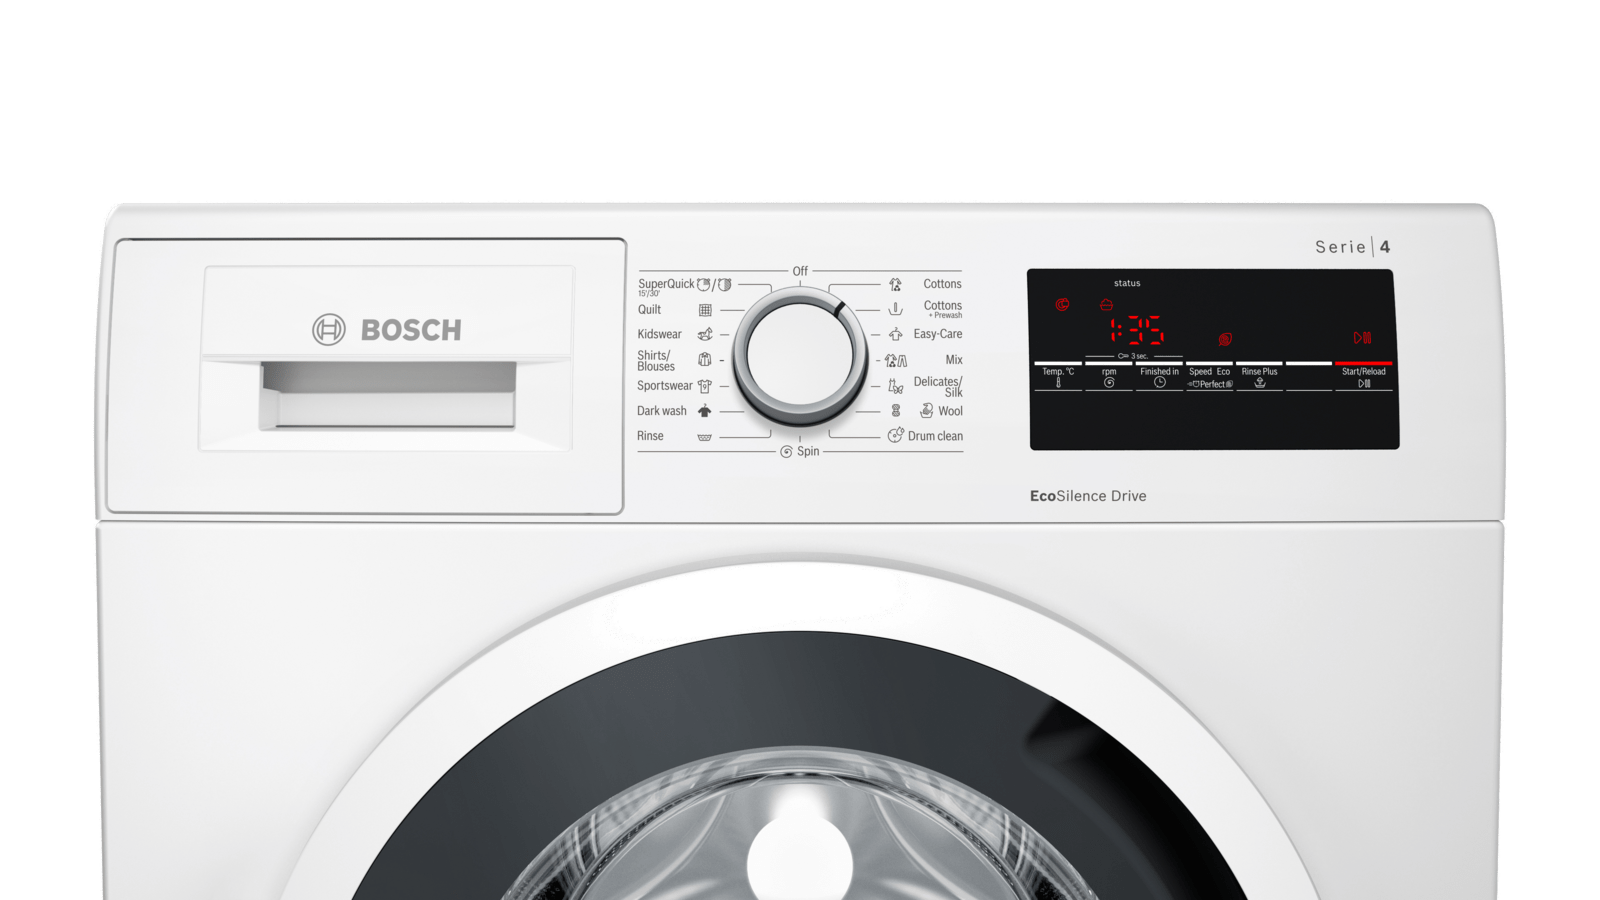 Bosch Front Loading Washing Machine User Manual